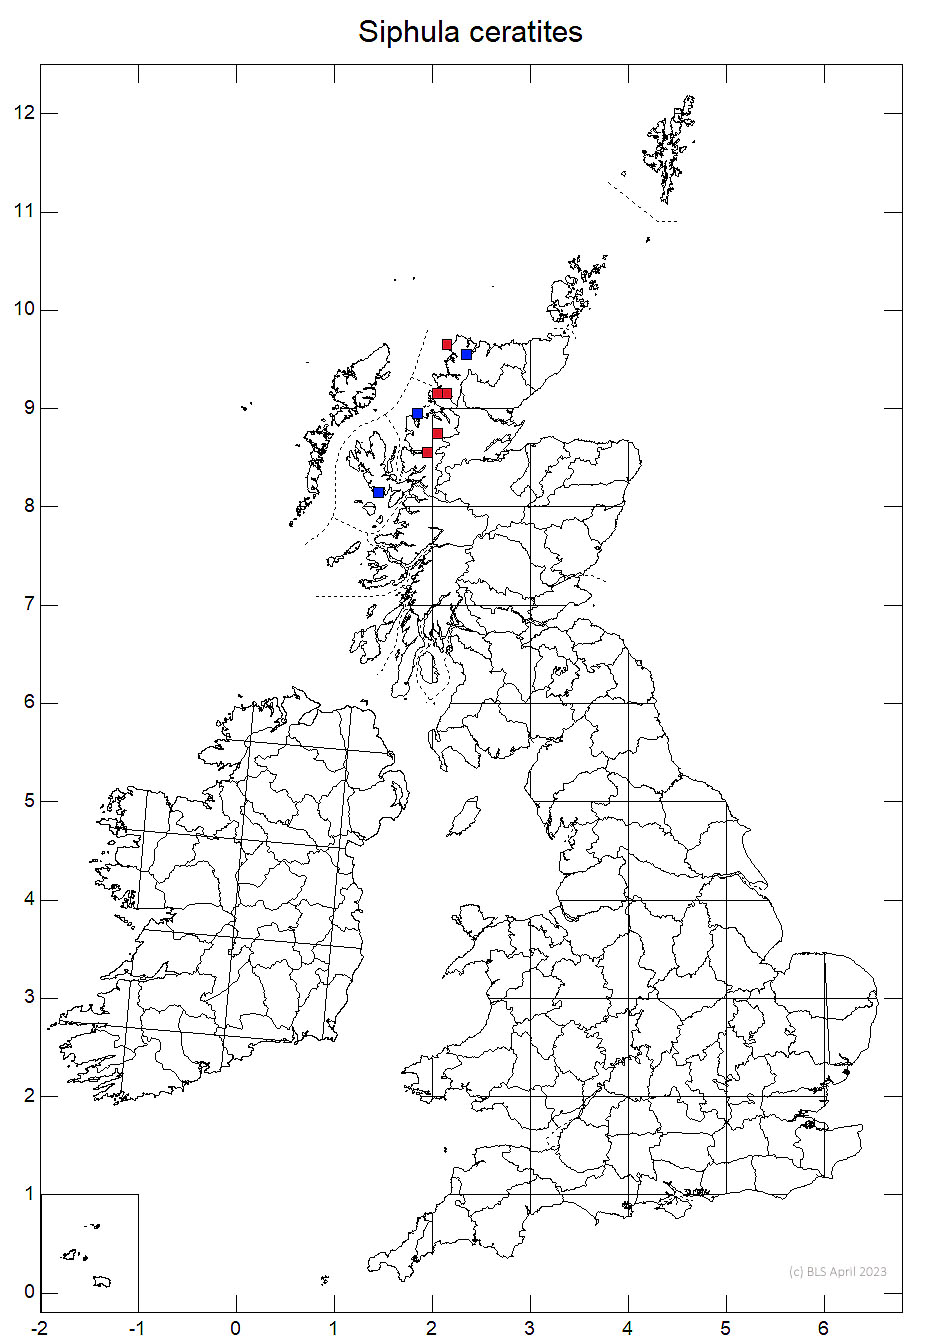 Siphula ceratites 10km sq distribution map